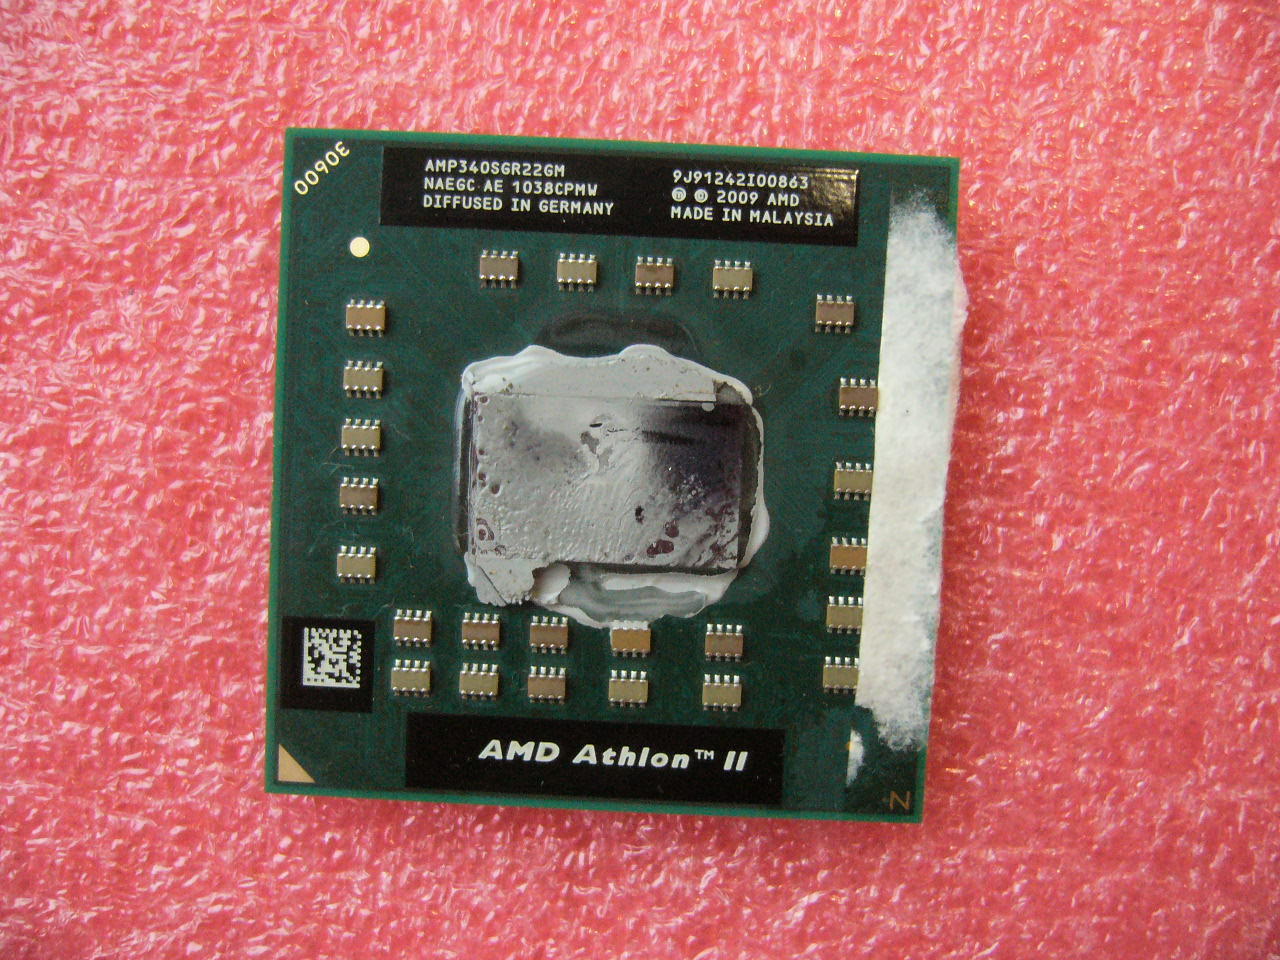 QTY 1x AMD Athlon II P340 2.2GHz Dual-Core (AMP340SGR22GM) Laptop CPU Socket S1